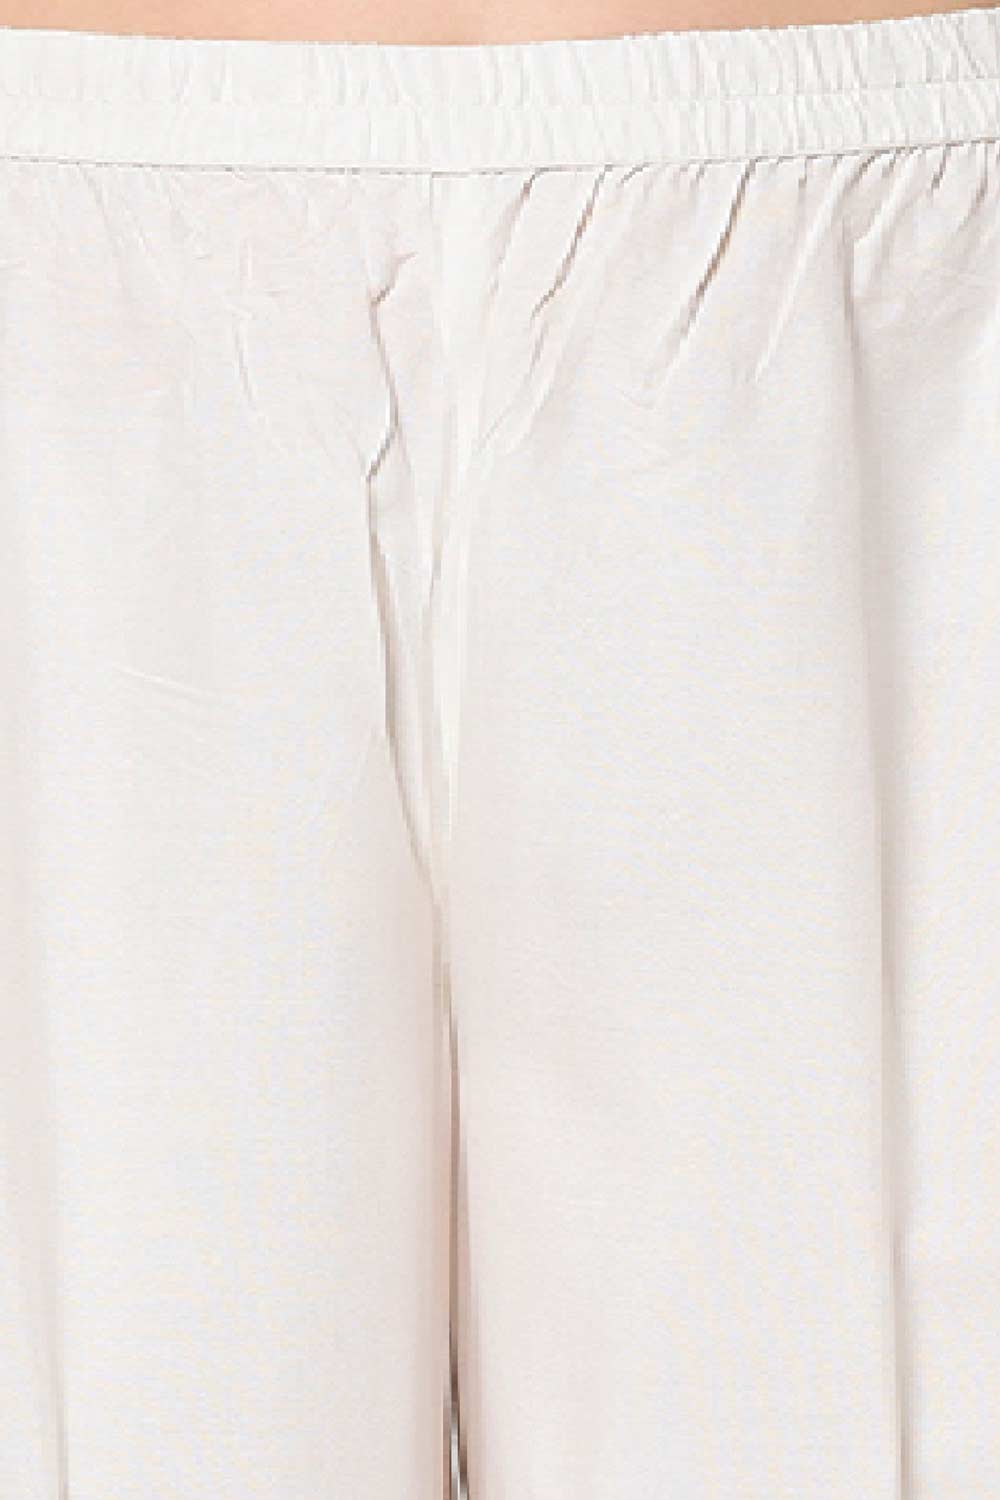 Buy Rayon Block Printed Ready to Wear Suit Set in Teal Green Online - Zoom In